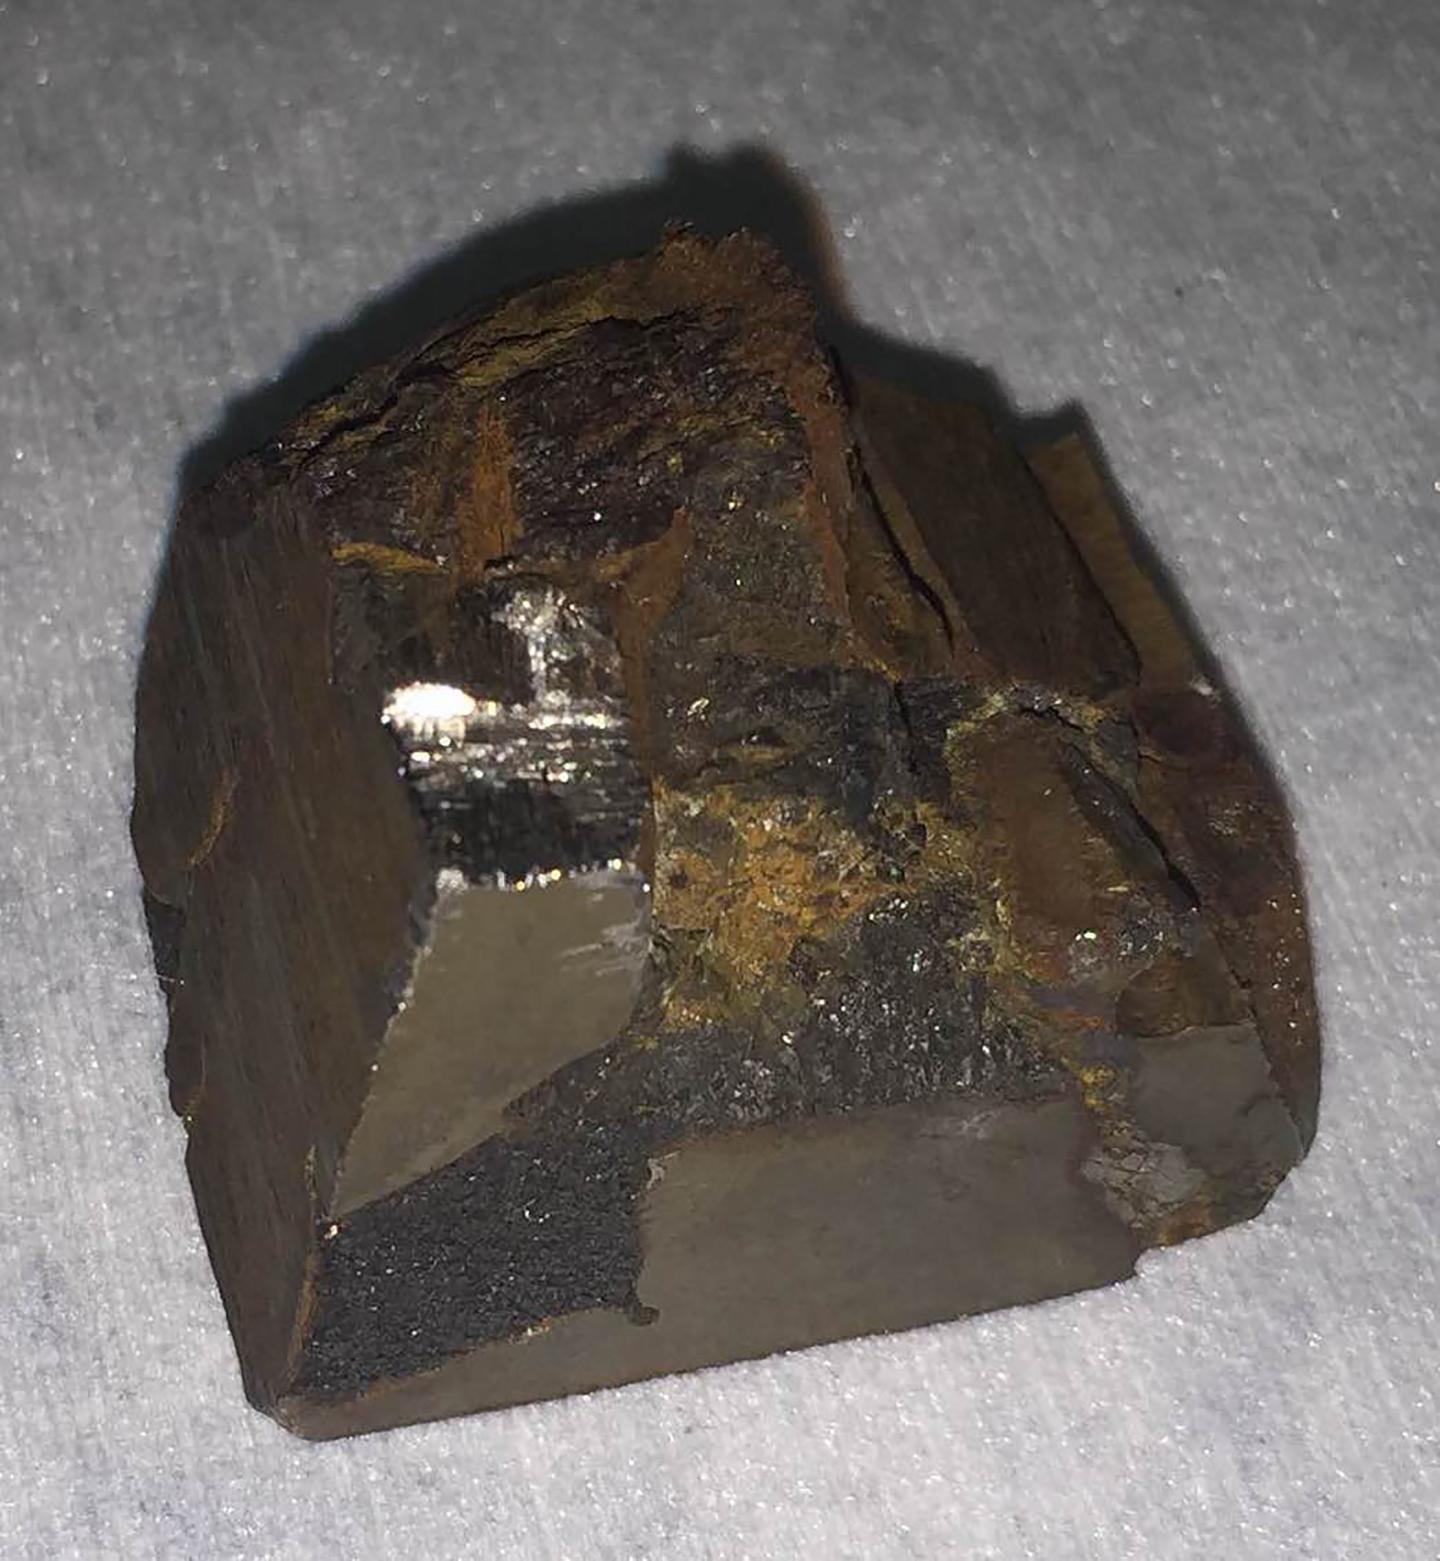 Superconductive grains were found in this piece of the Mundrabilla meteorite.